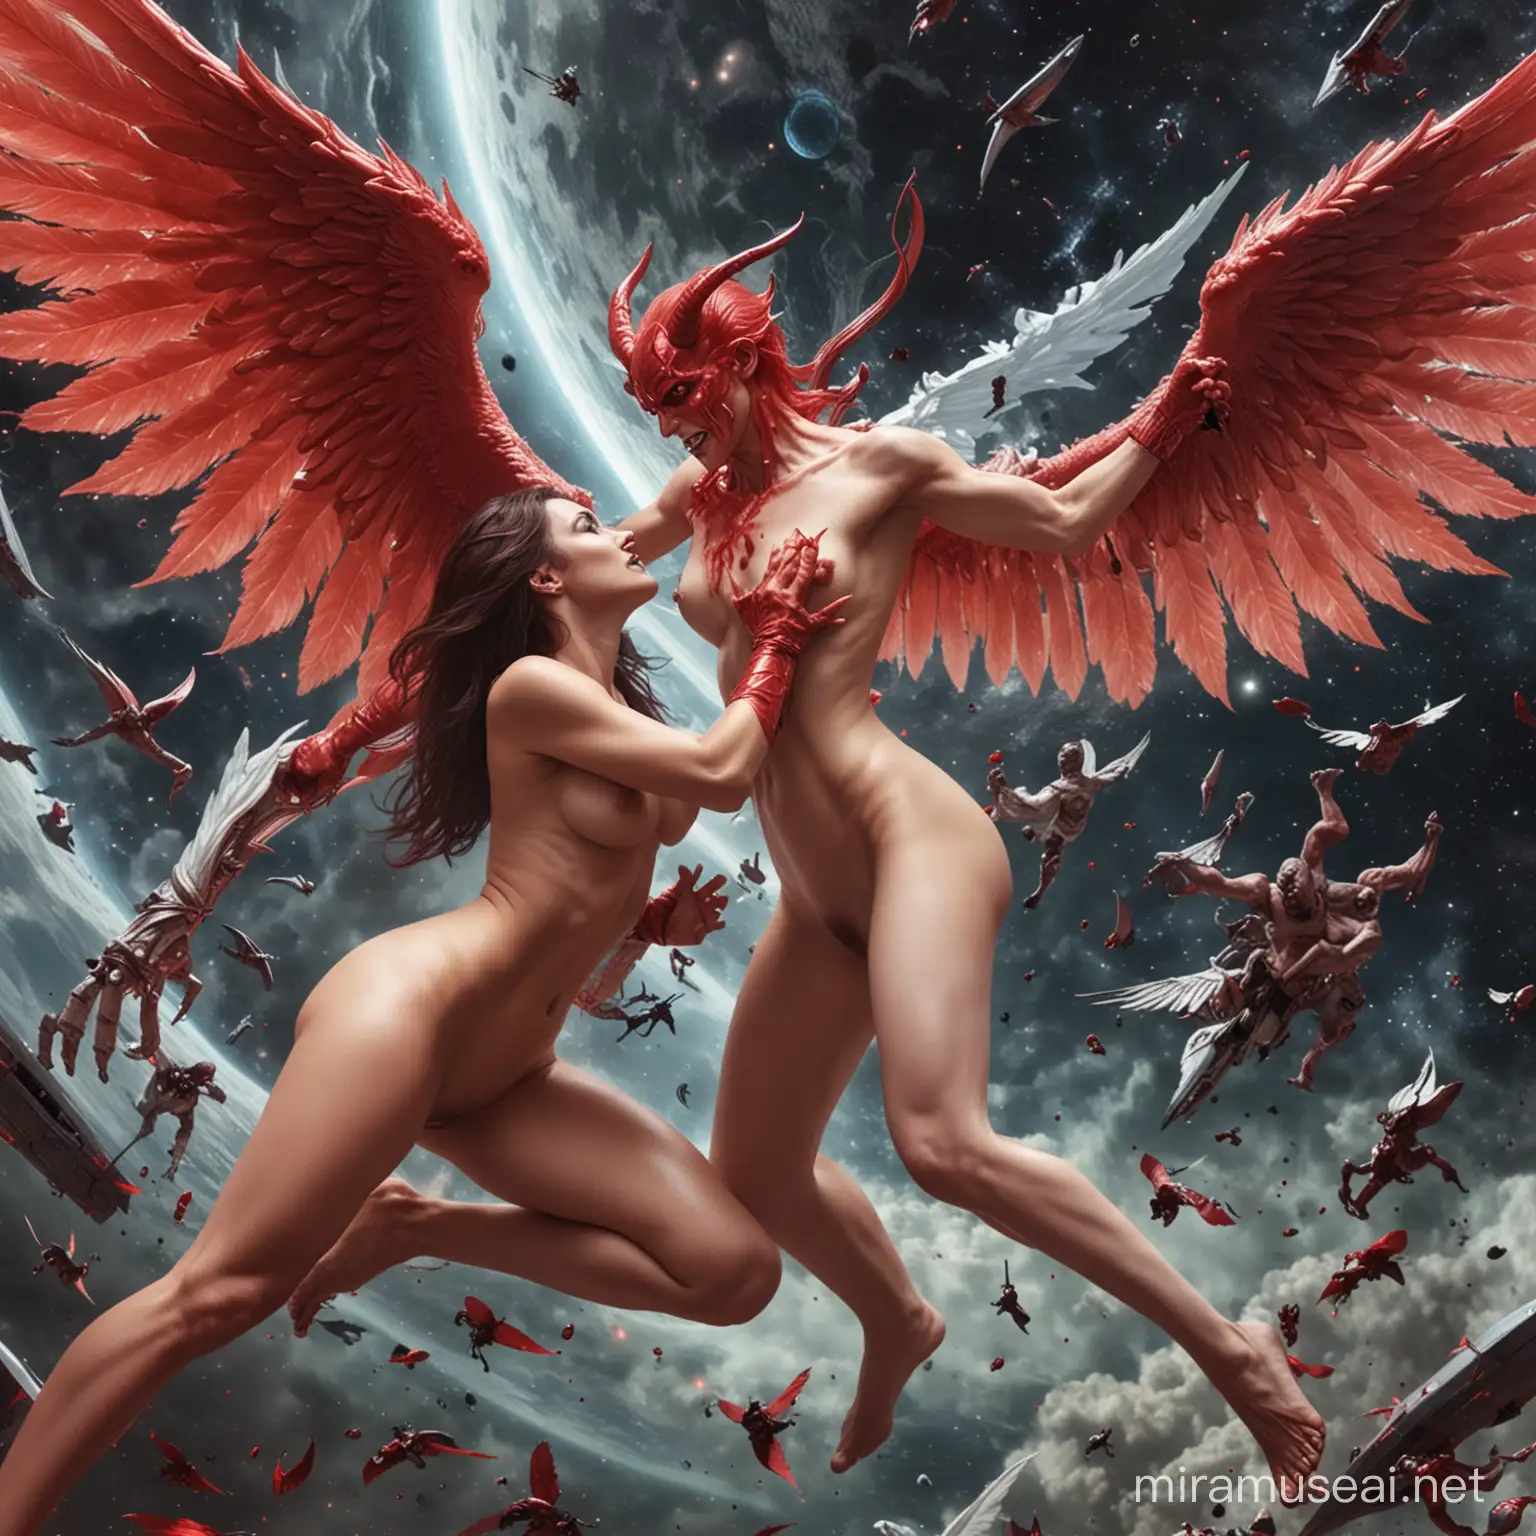 Epic Battle Red Demon vs Angelic Warrior in Cosmic Showdown